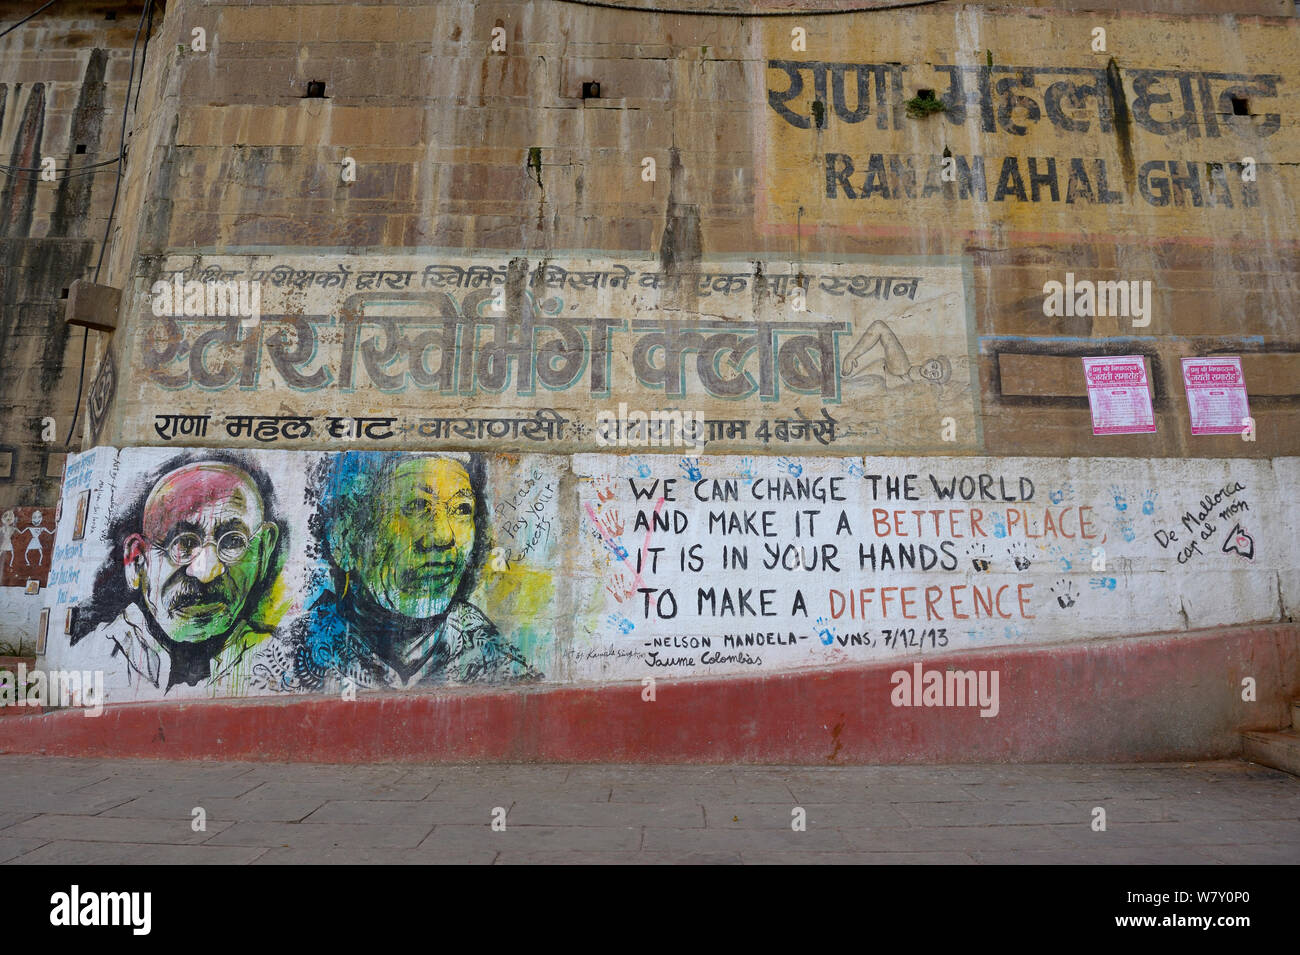 Fresque de Mahatma Gandhi et Nelson Mandela sur les rives du Gange, Varanasi, Uttah Pradesh, Inde, mars 2014. Banque D'Images